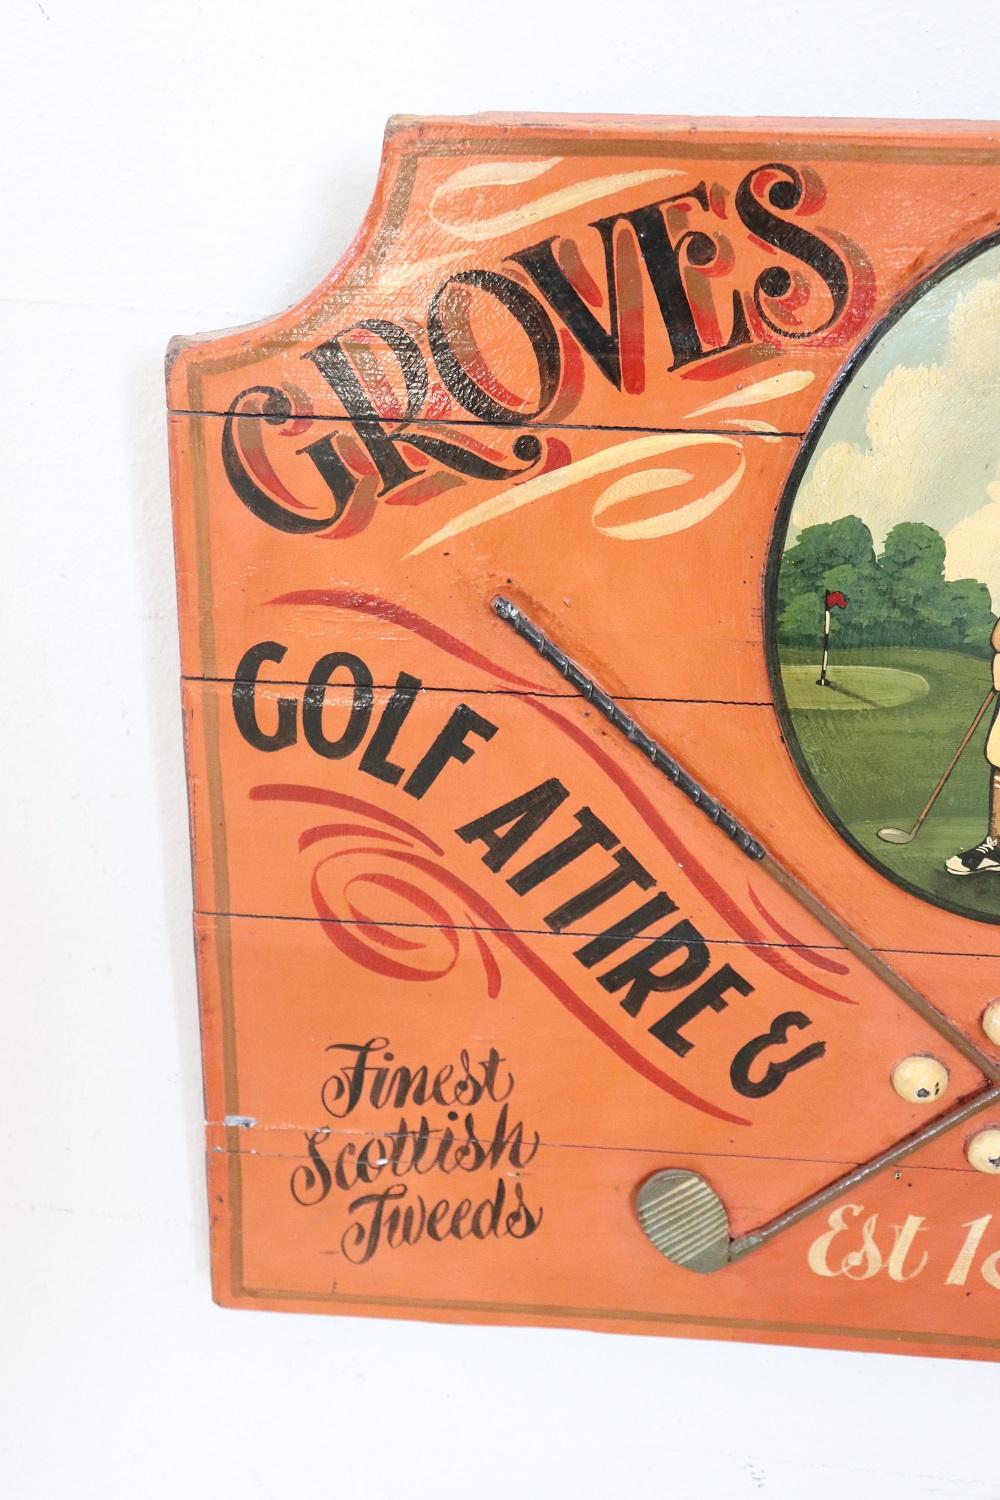 1920s golf attire